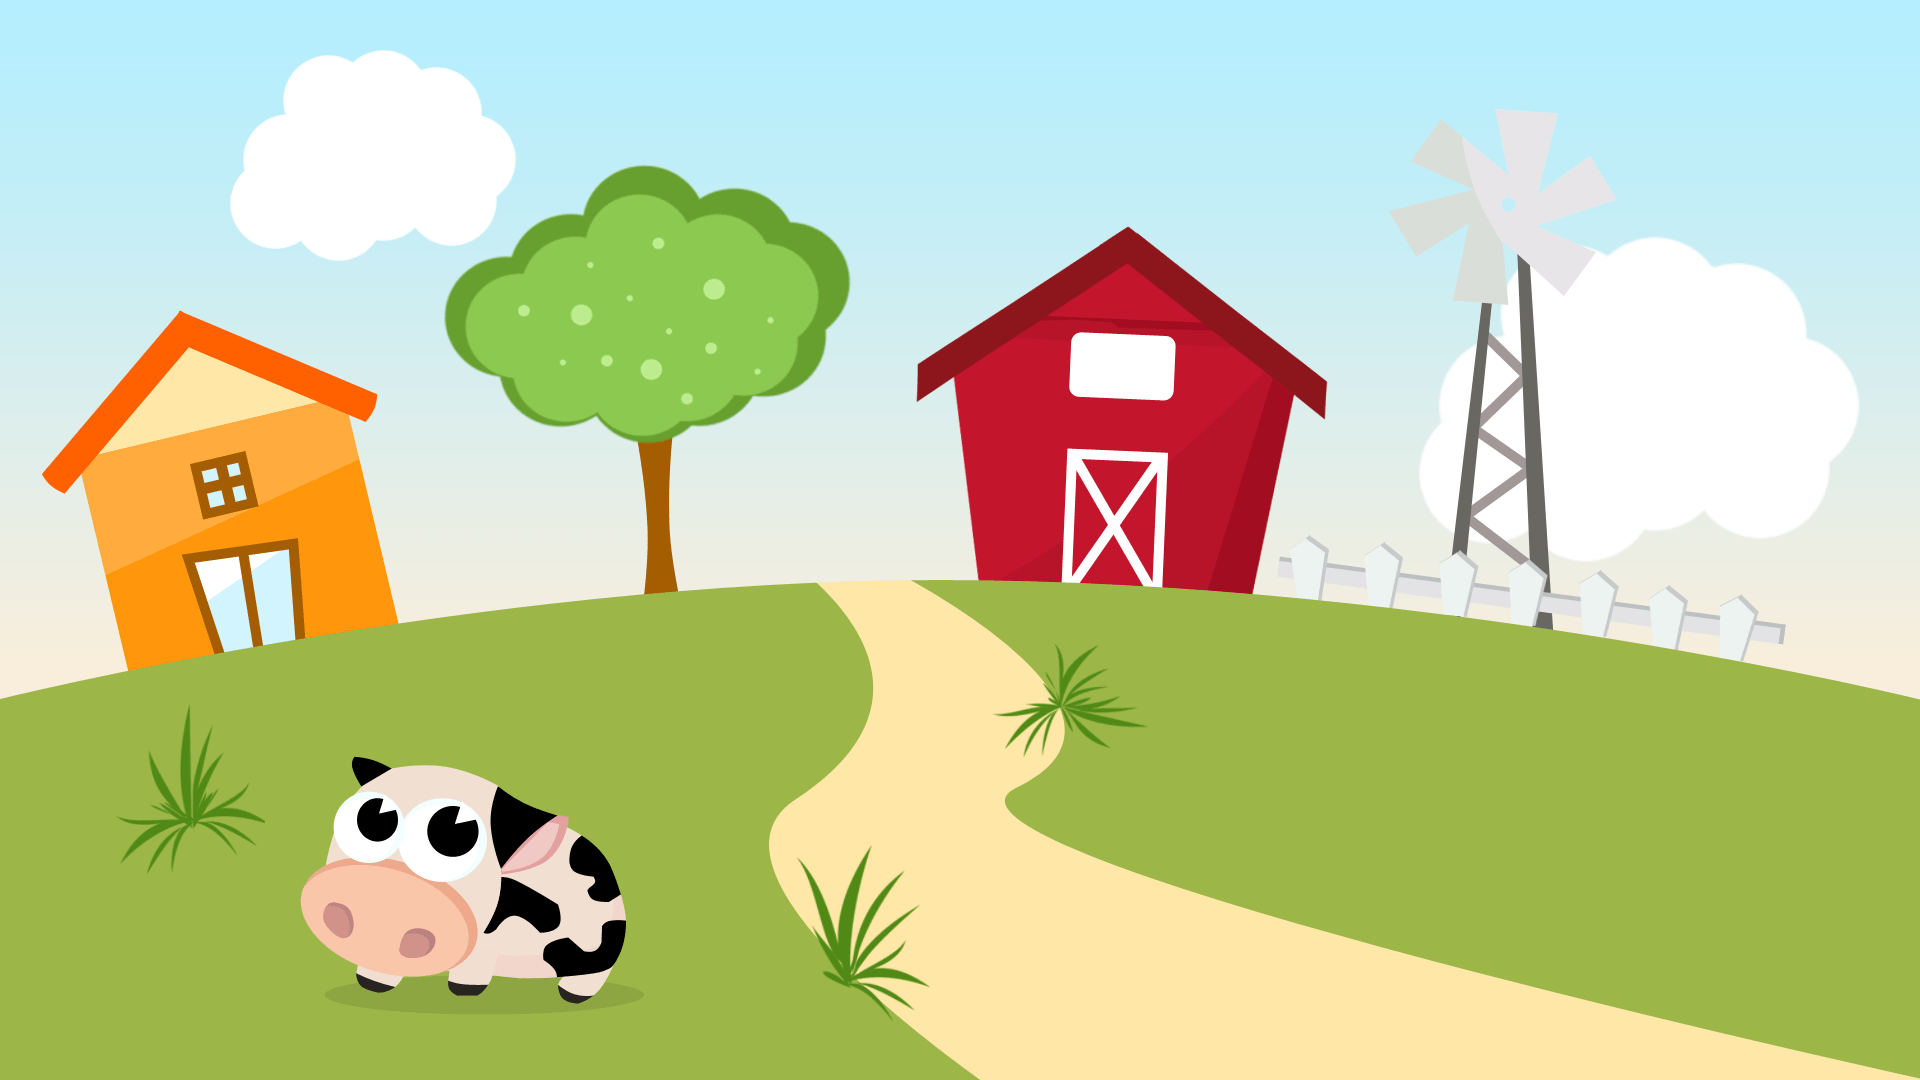 Cartoon Farmyard. Simple Image Is Loading With Cartoon Farmyard